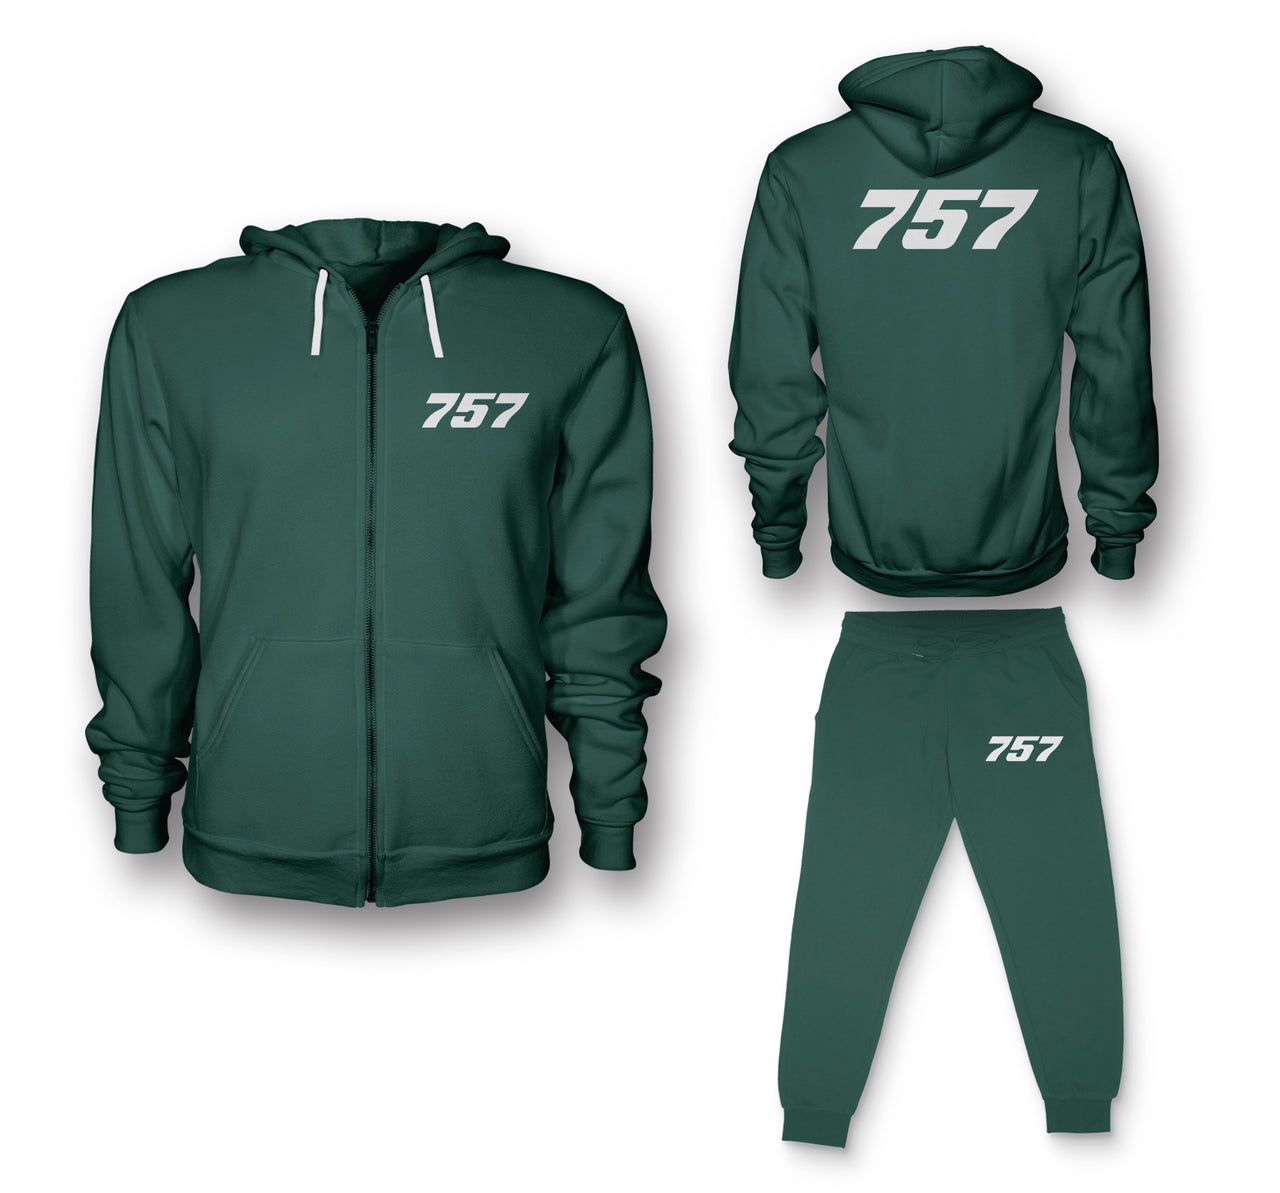 757 Flat Text Designed Zipped Hoodies & Sweatpants Set